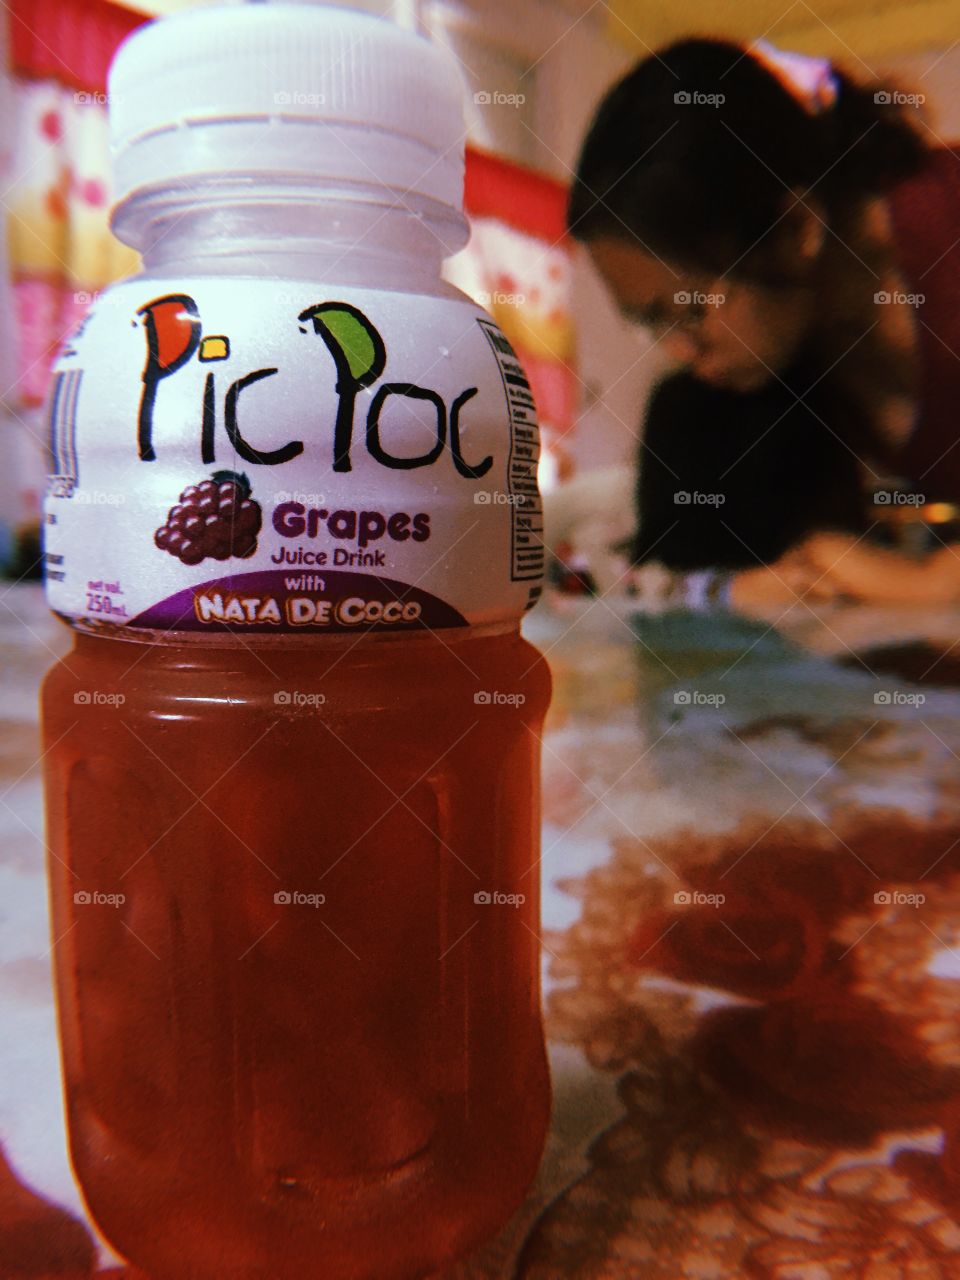 Pic Poc juice drink